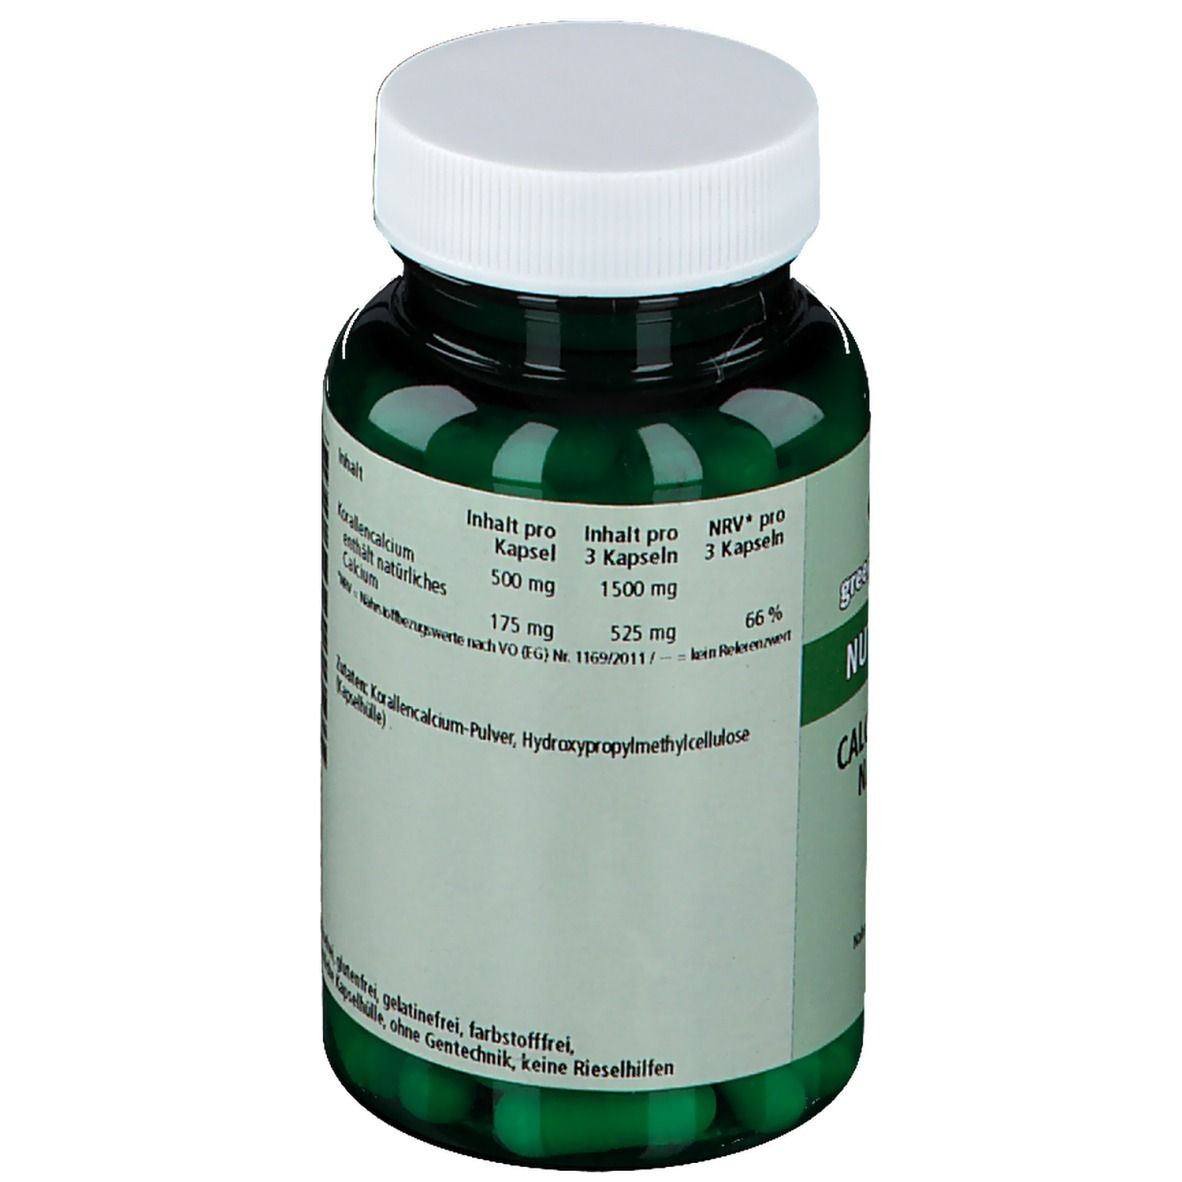 green line Calcium 170 mg